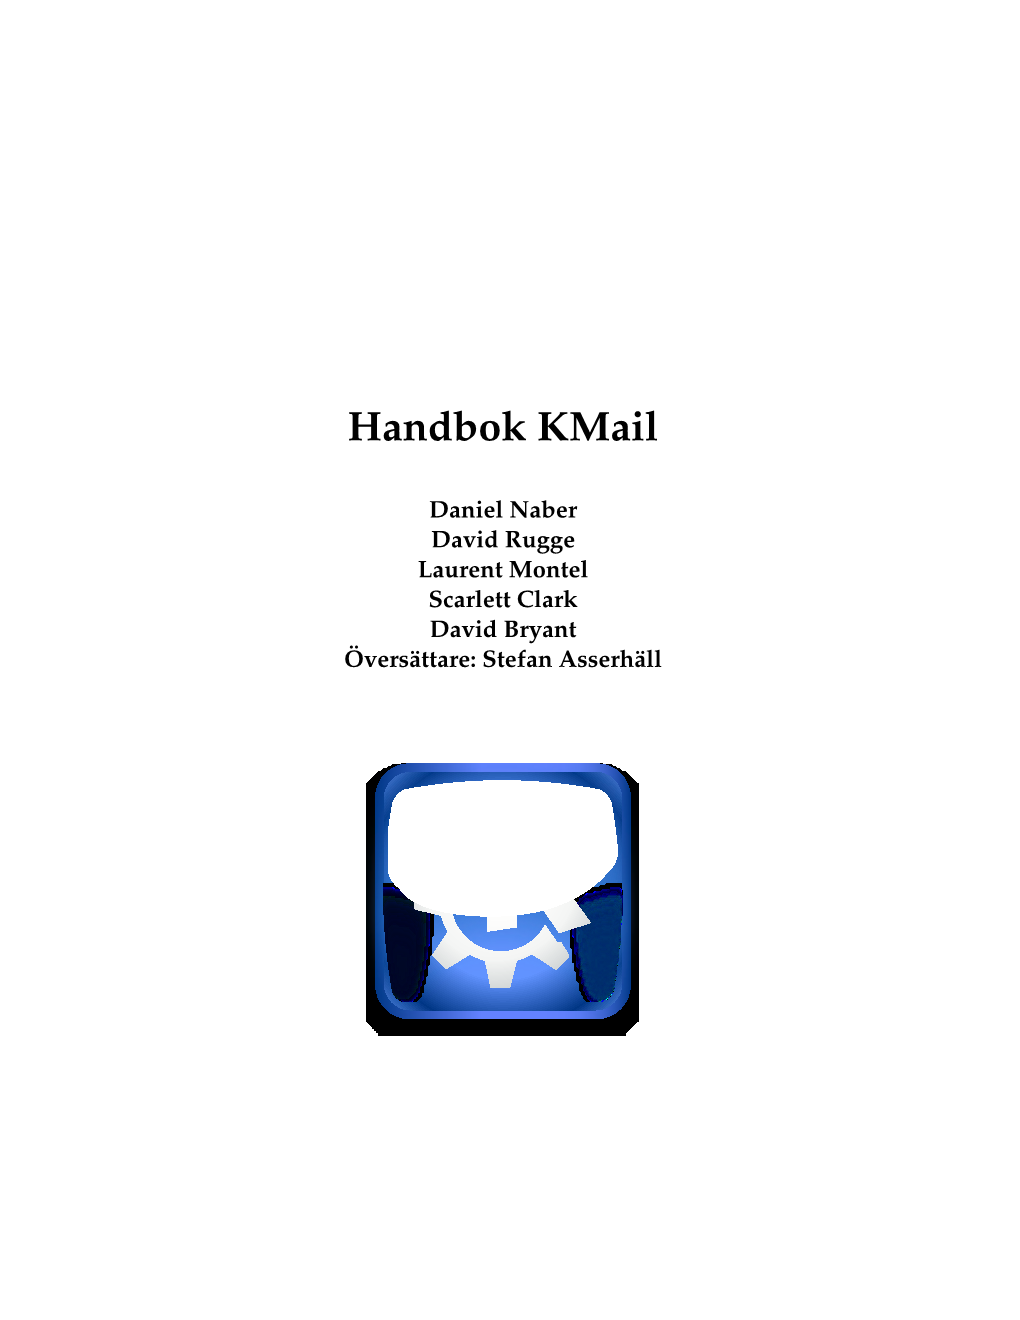 Handbok Kmail